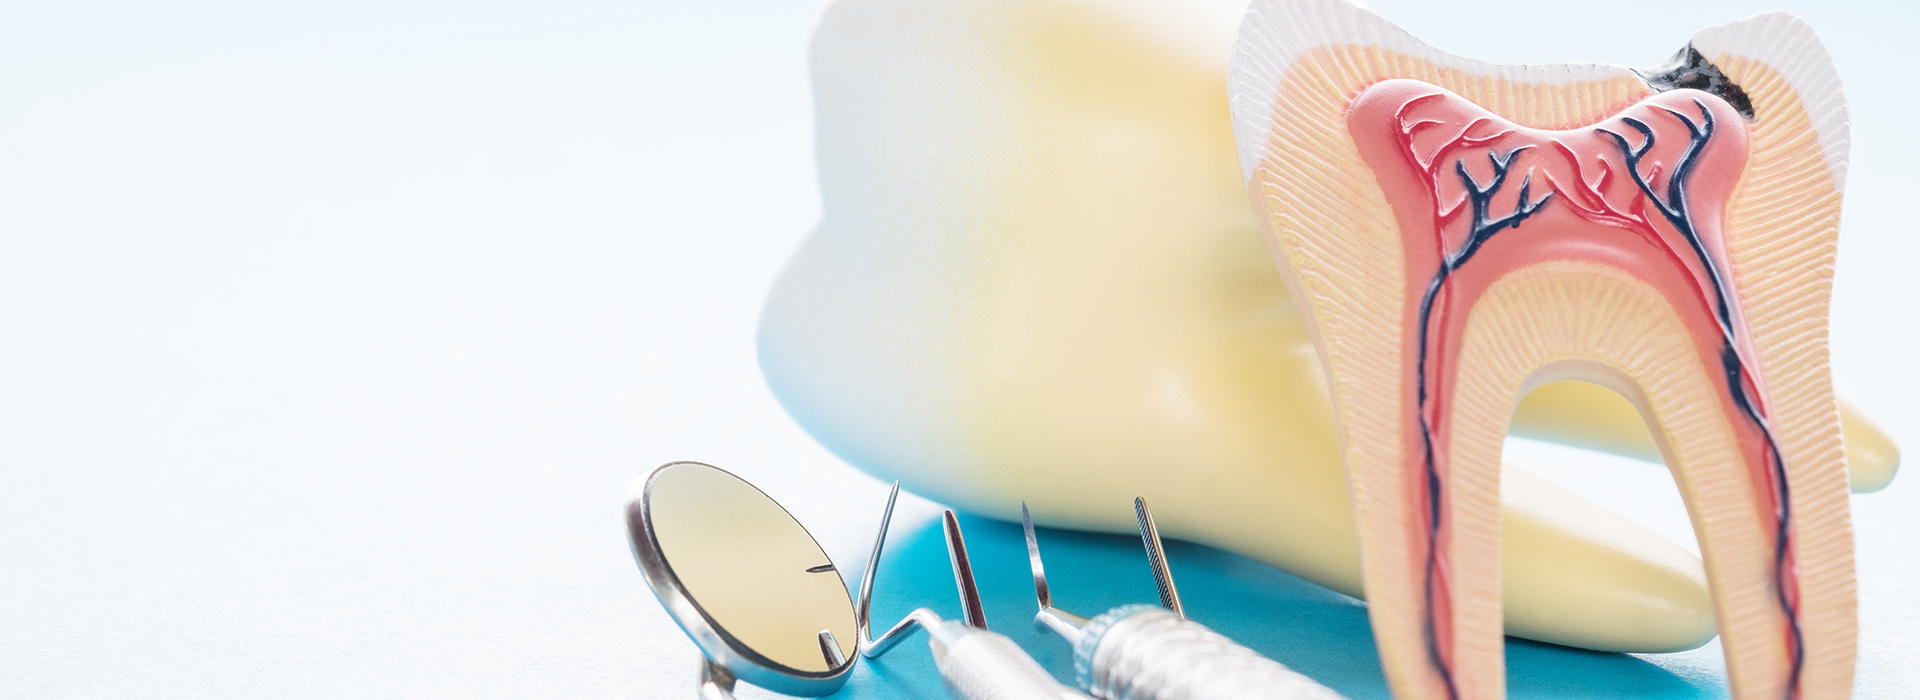 Astoria Modern Family Dental | Pediatric Dentistry, TMJ Disorders and Dental Cleanings